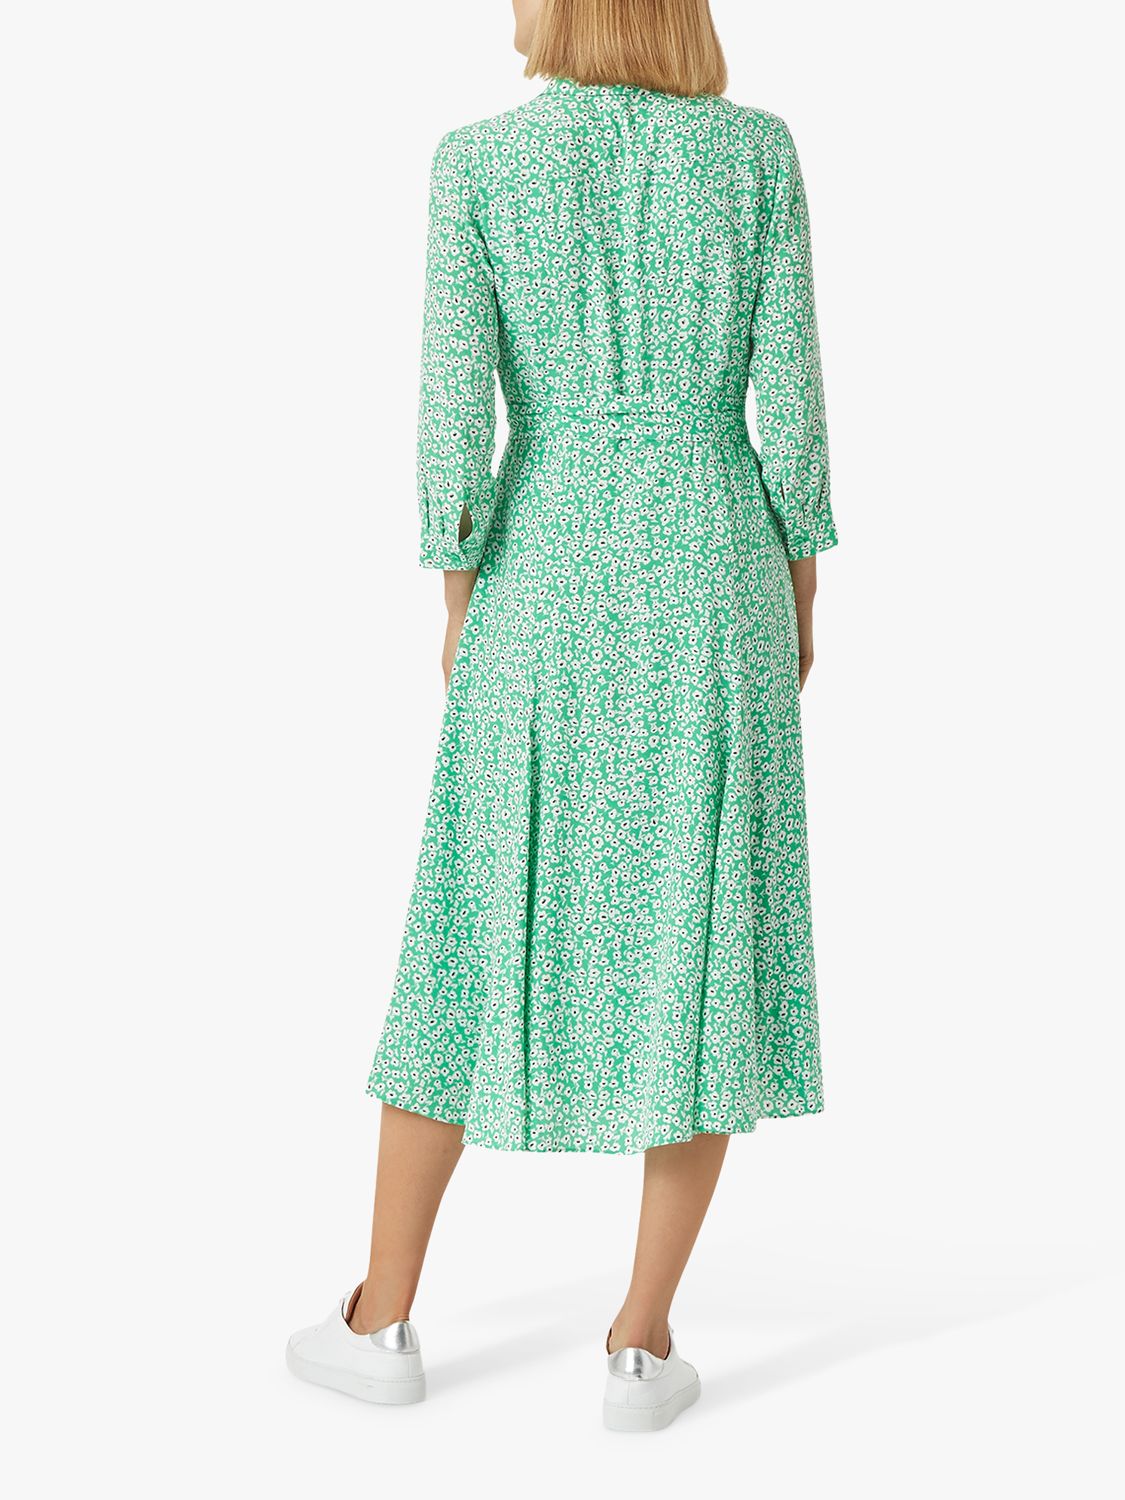 Hobbs Frederica Shirt Dress, Green/Multi